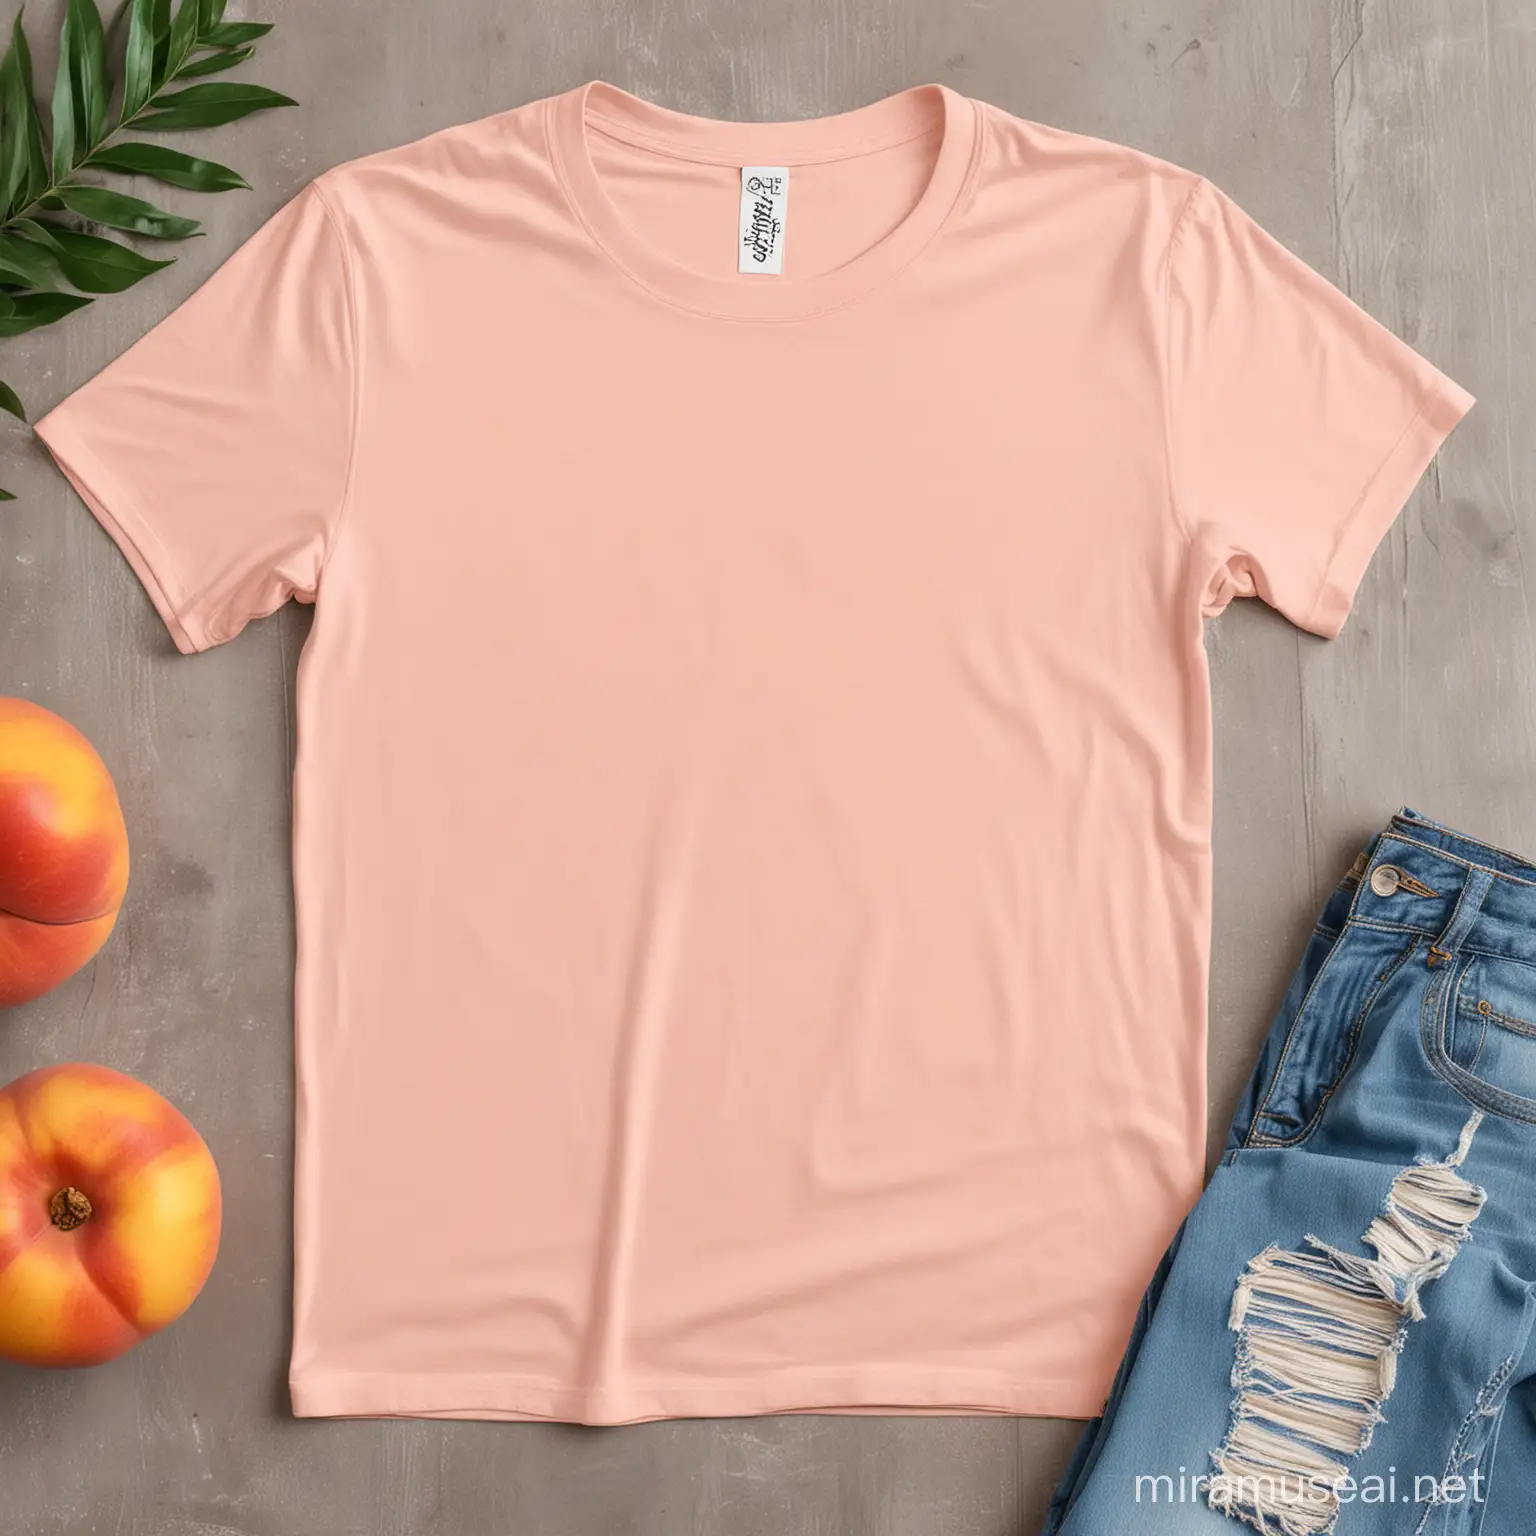 Bella Canvas 3001 mockup t-shirt peaches color 